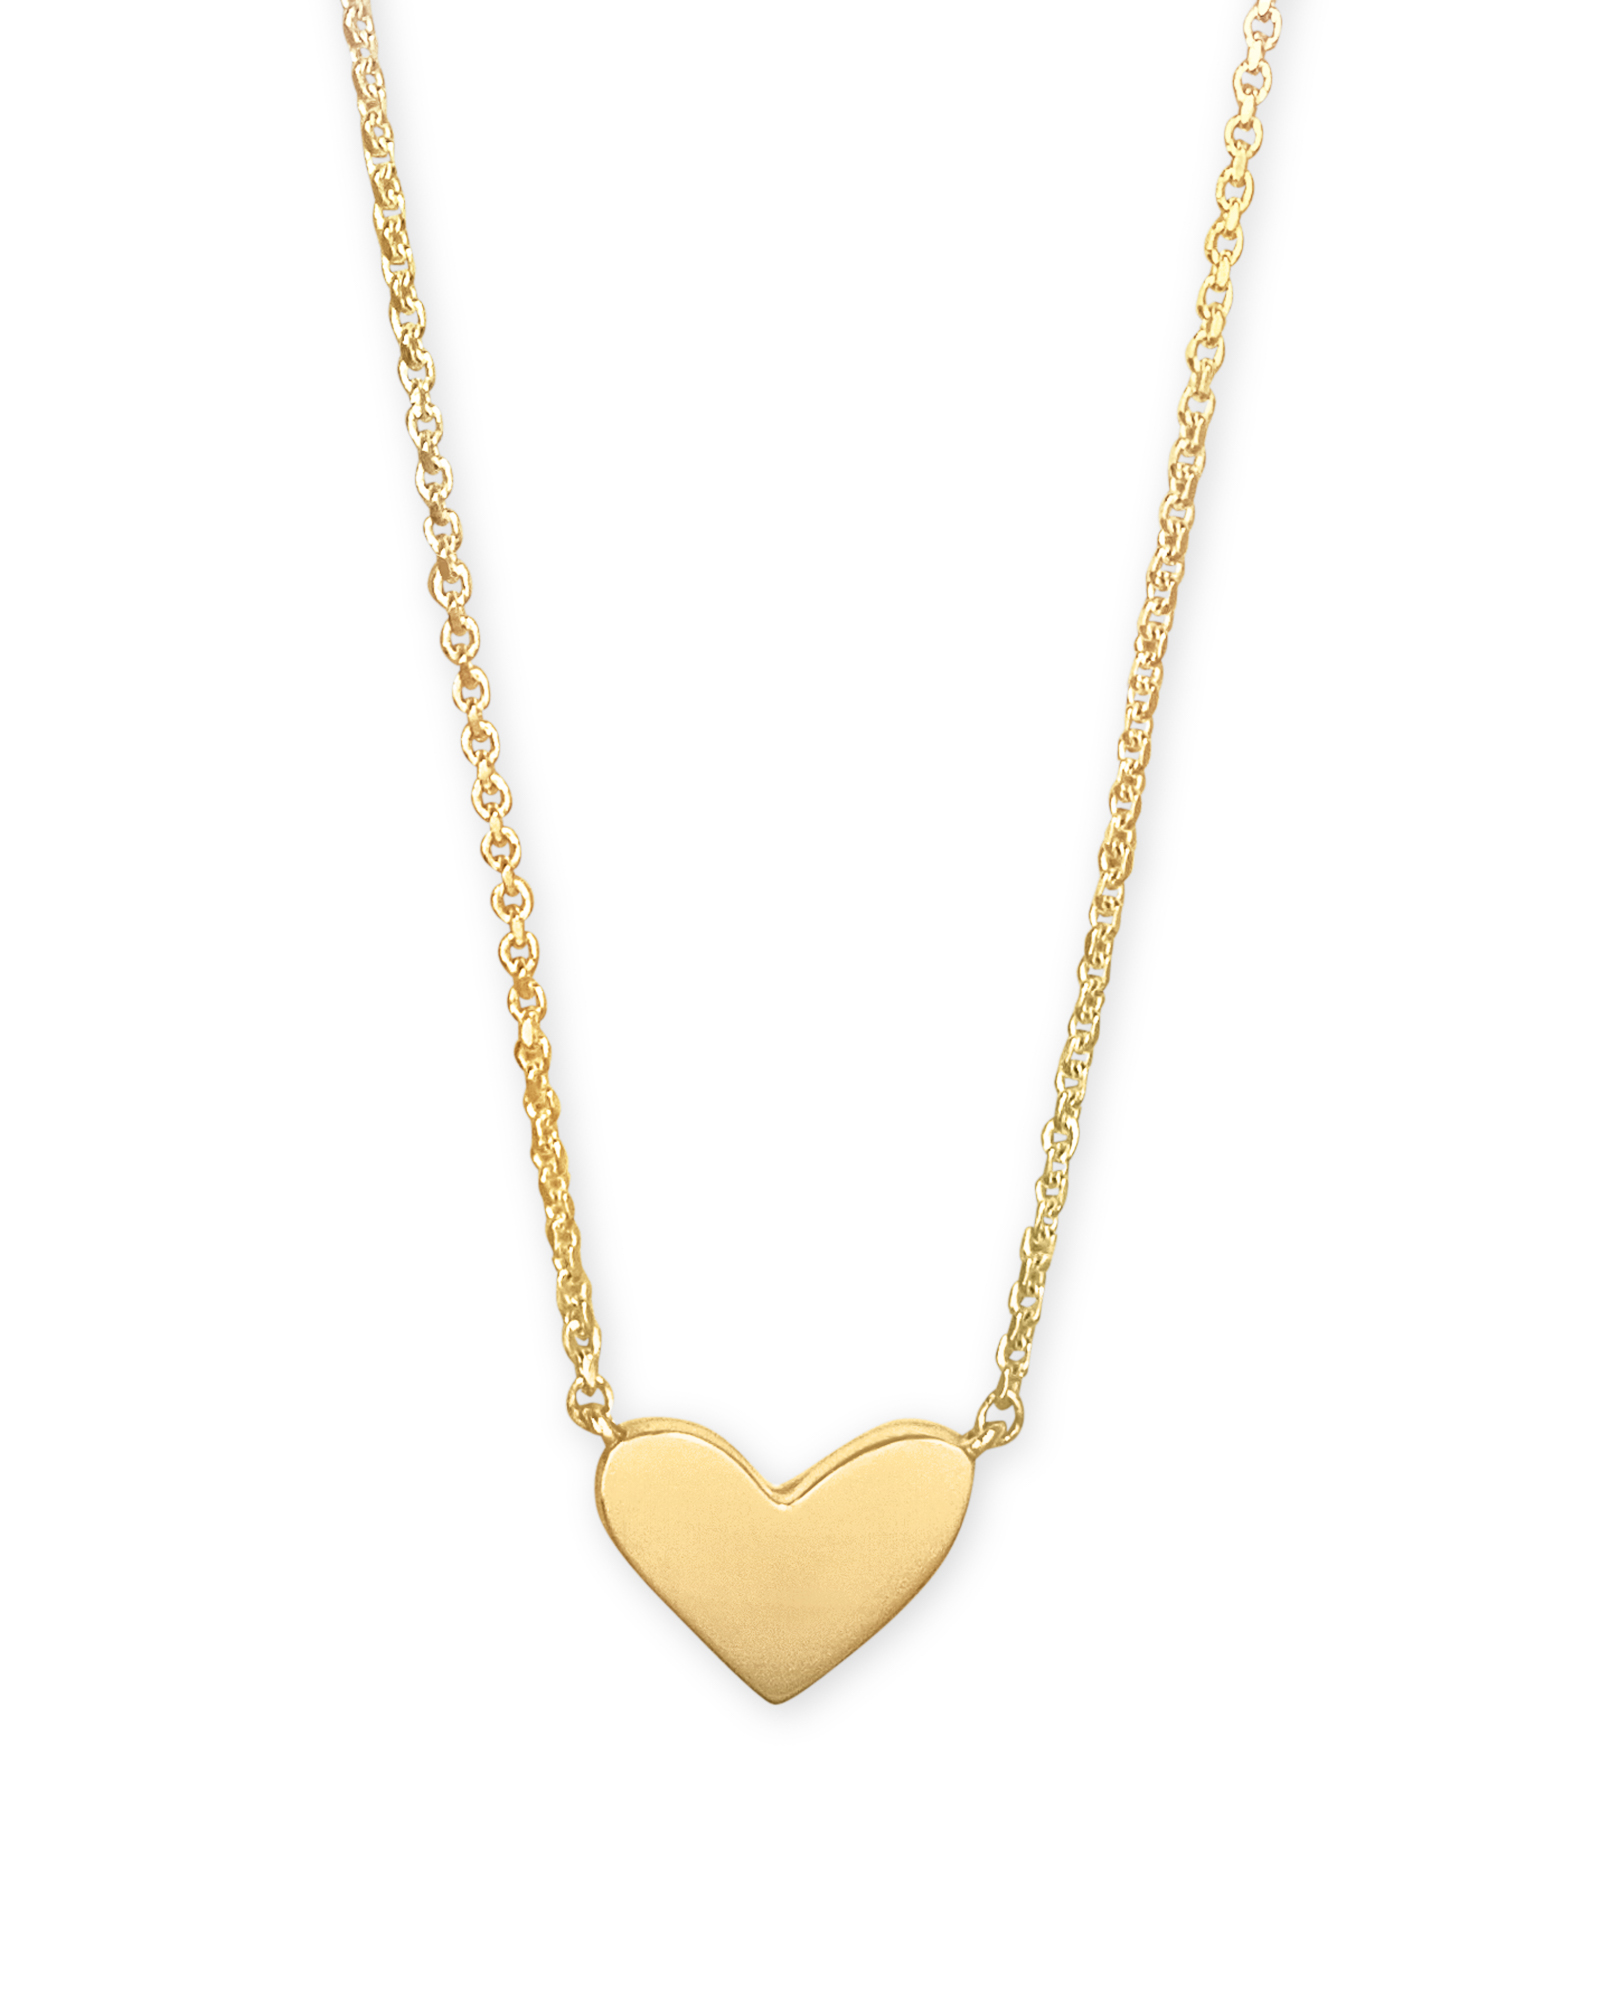 Ari Heart Pendant Necklace in 18k Gold Vermeil | Kendra Scott